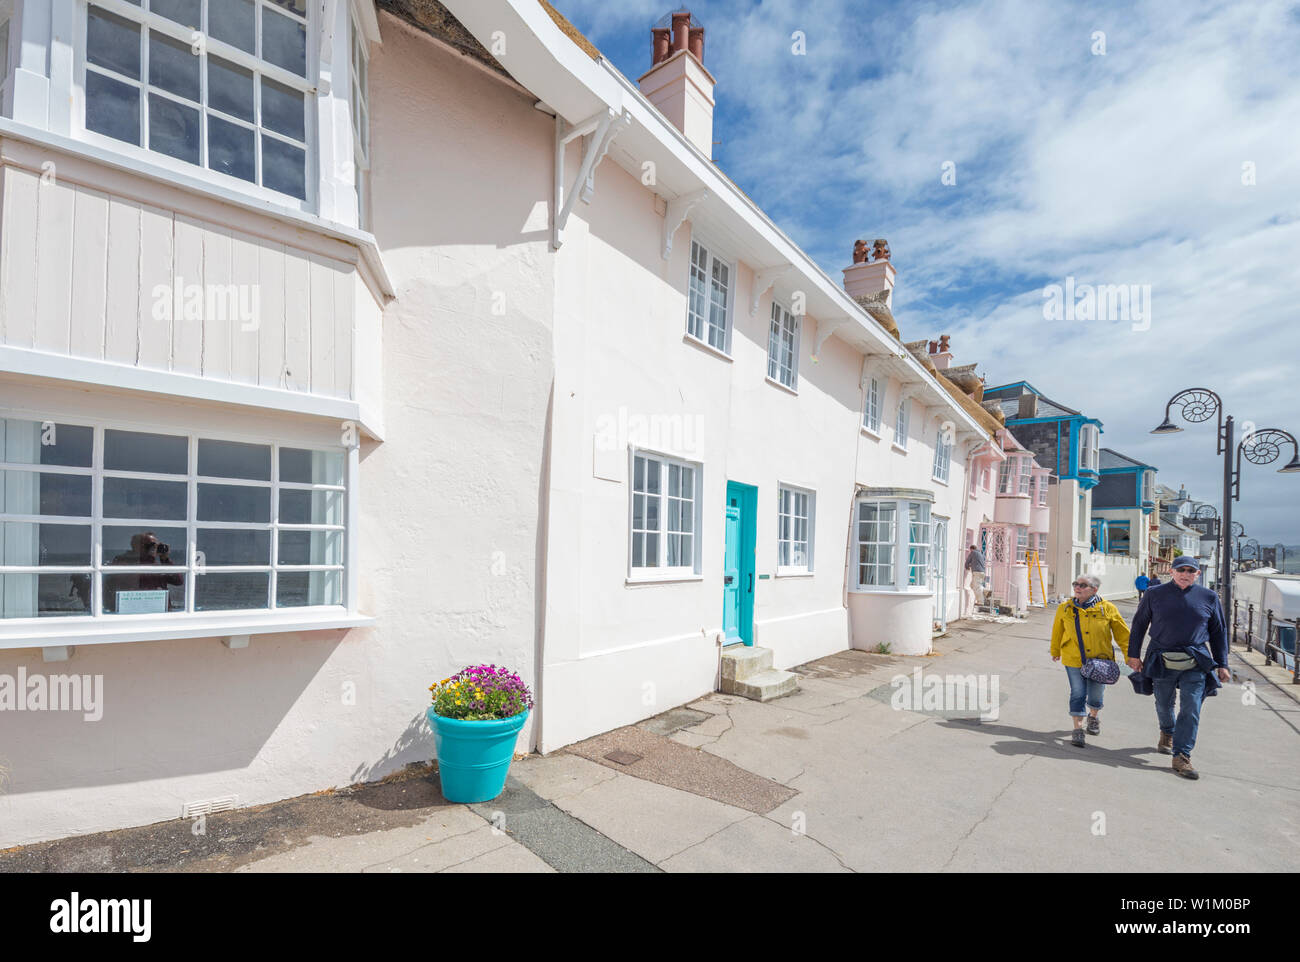 Seaside cottages attrayants à Lyme Regis, Dorset, England, UK Banque D'Images